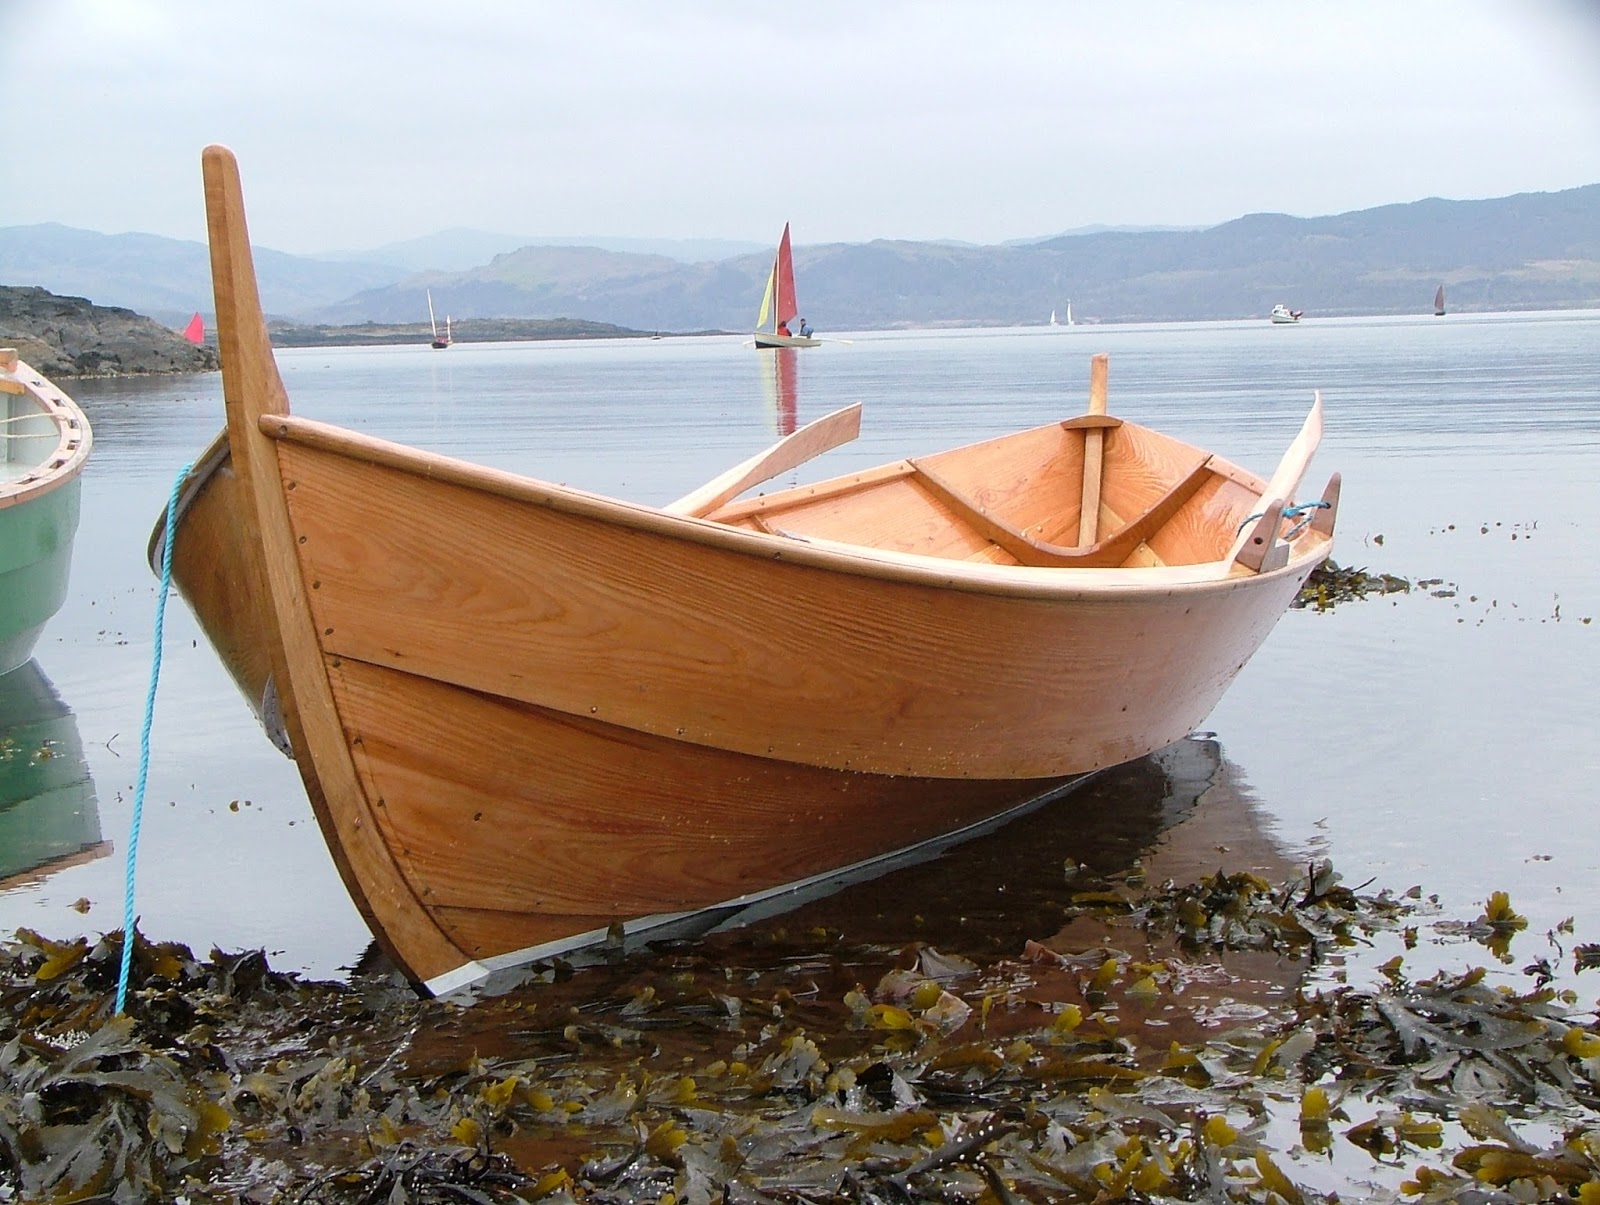 Viking Boats of Ullapool: On Reflection